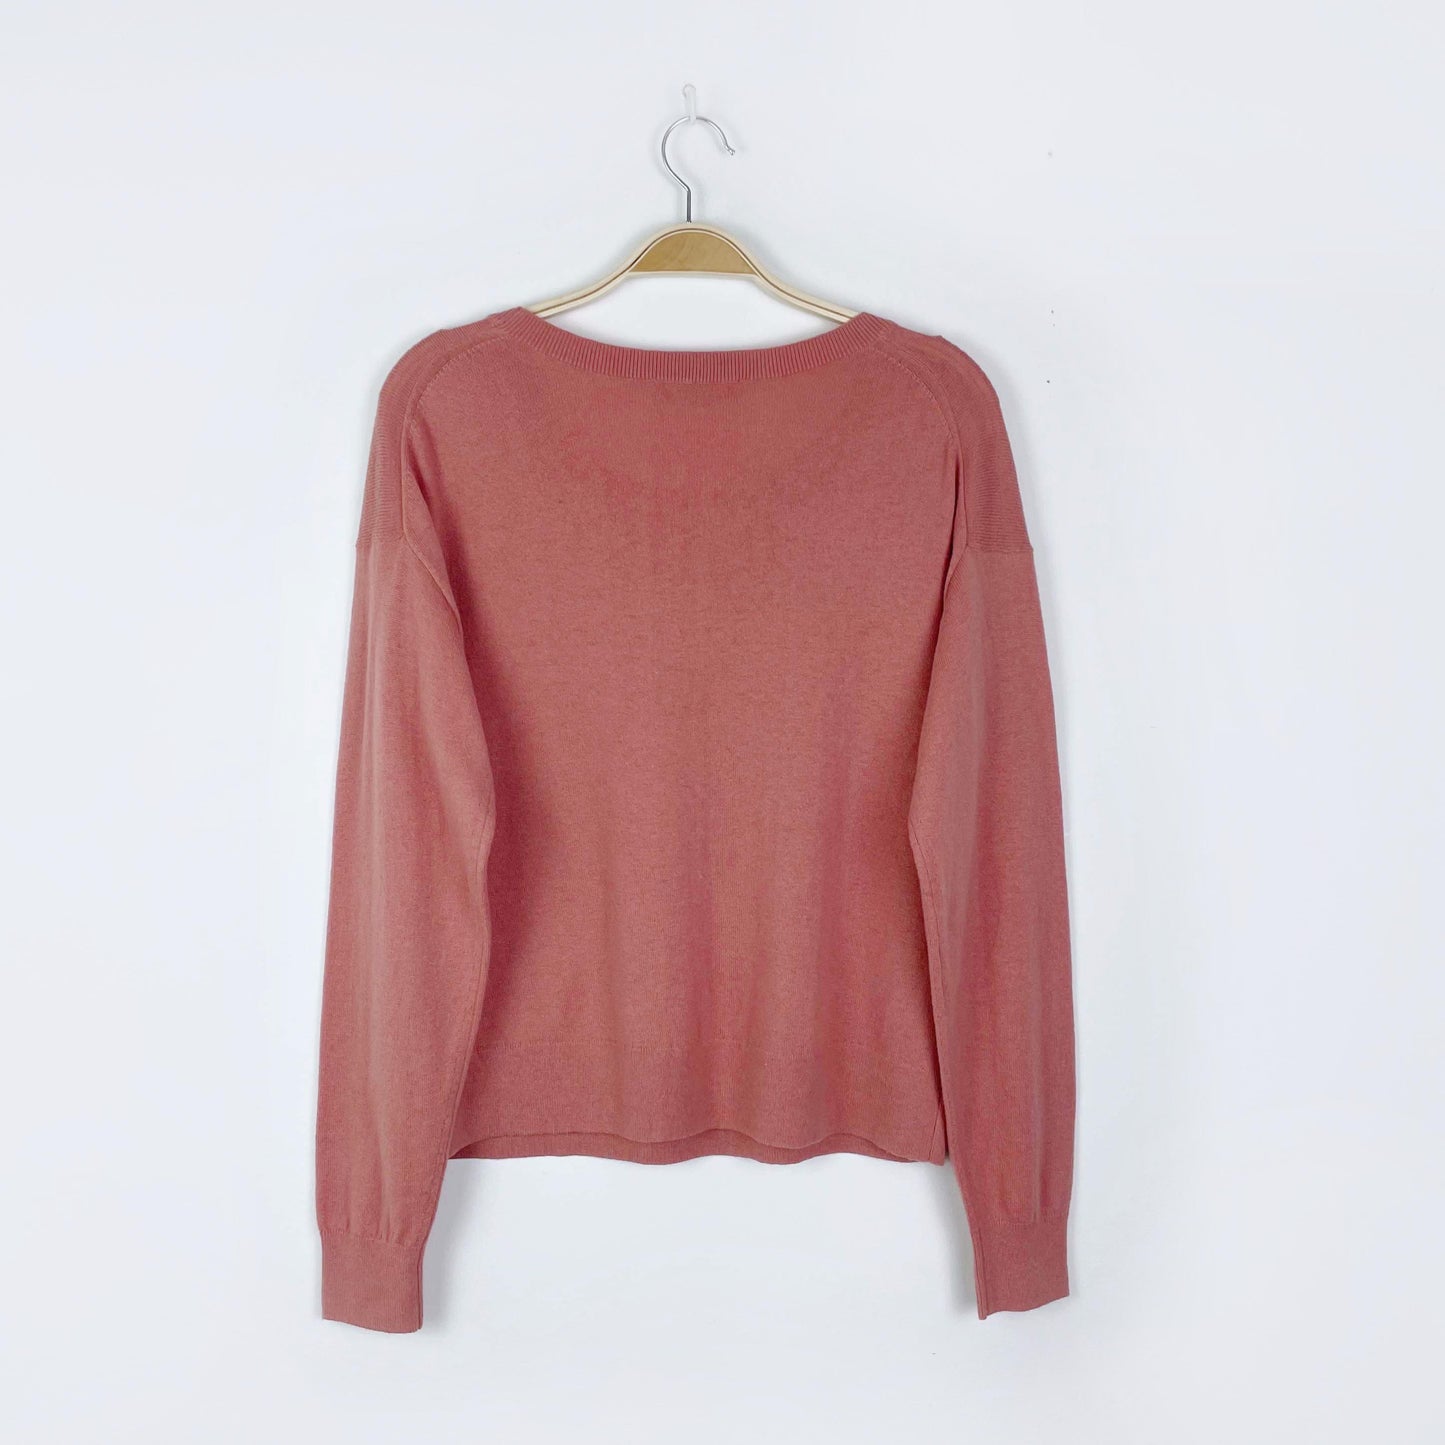 everlane wool-cotton pink crewneck sweater - size medium